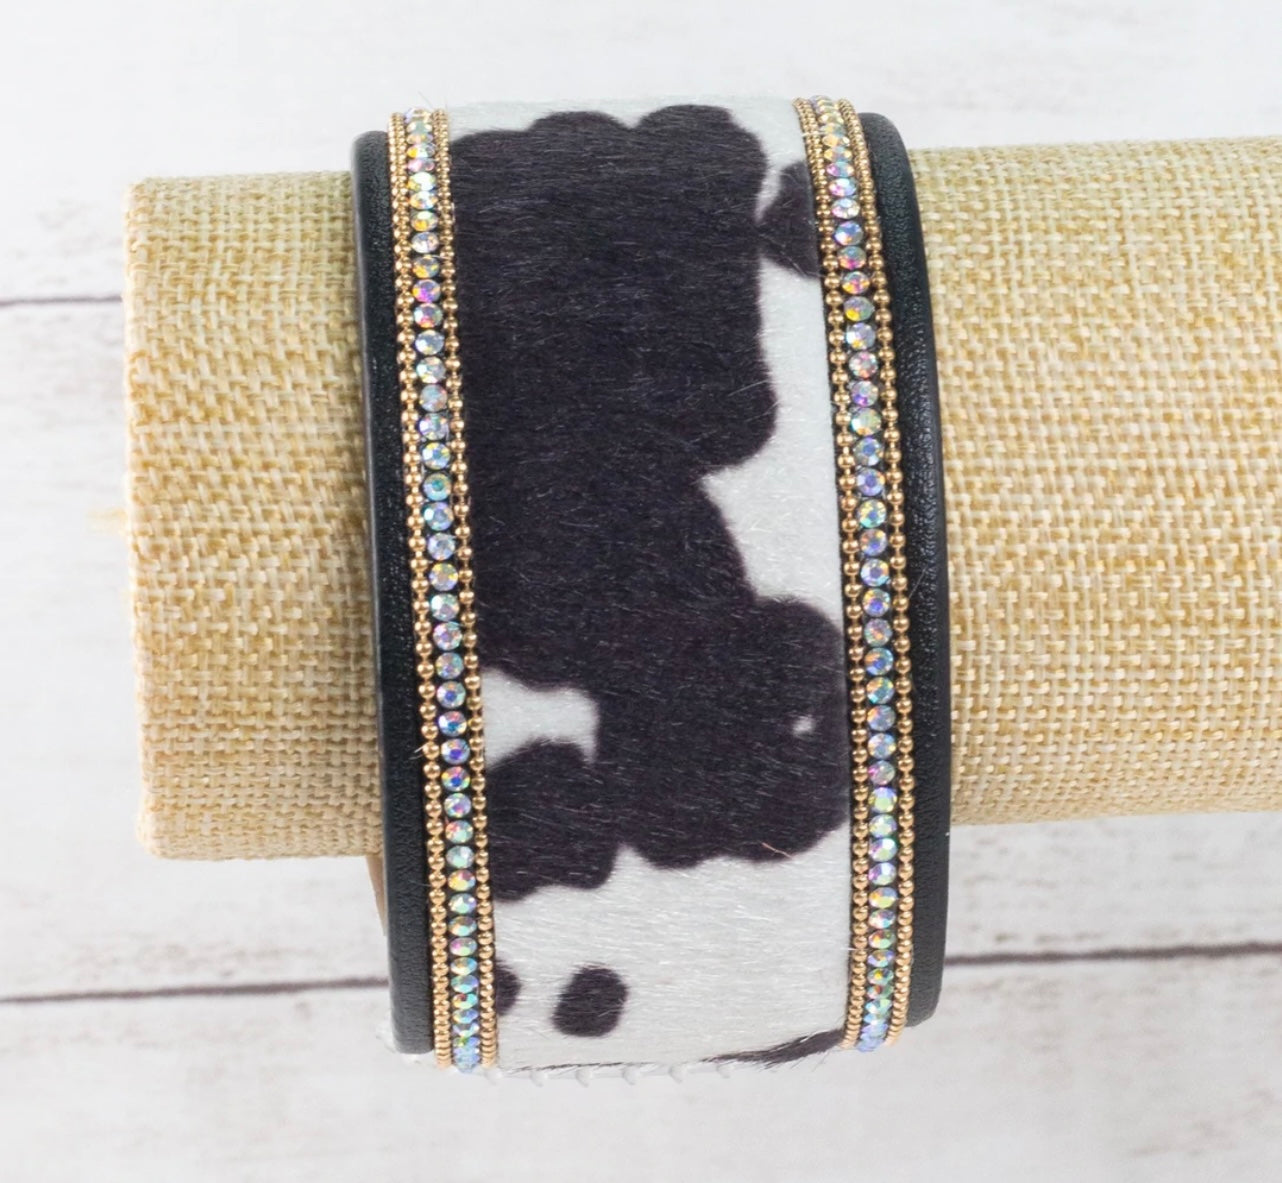 Cow print cuff bracelets